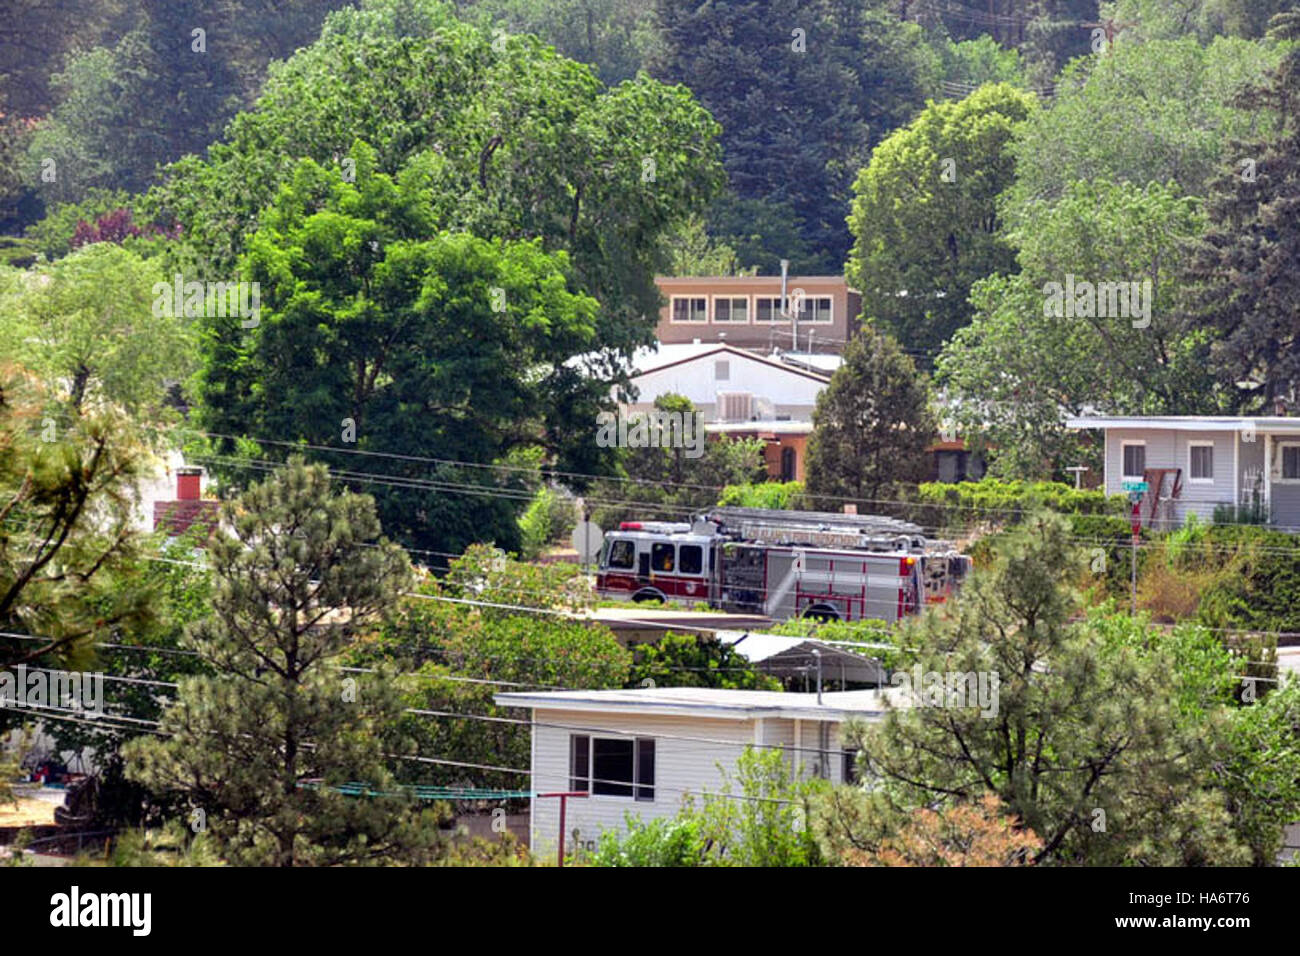 Losalamosnatlab 5888889955 weben durch Berghang Häuser Stockfoto